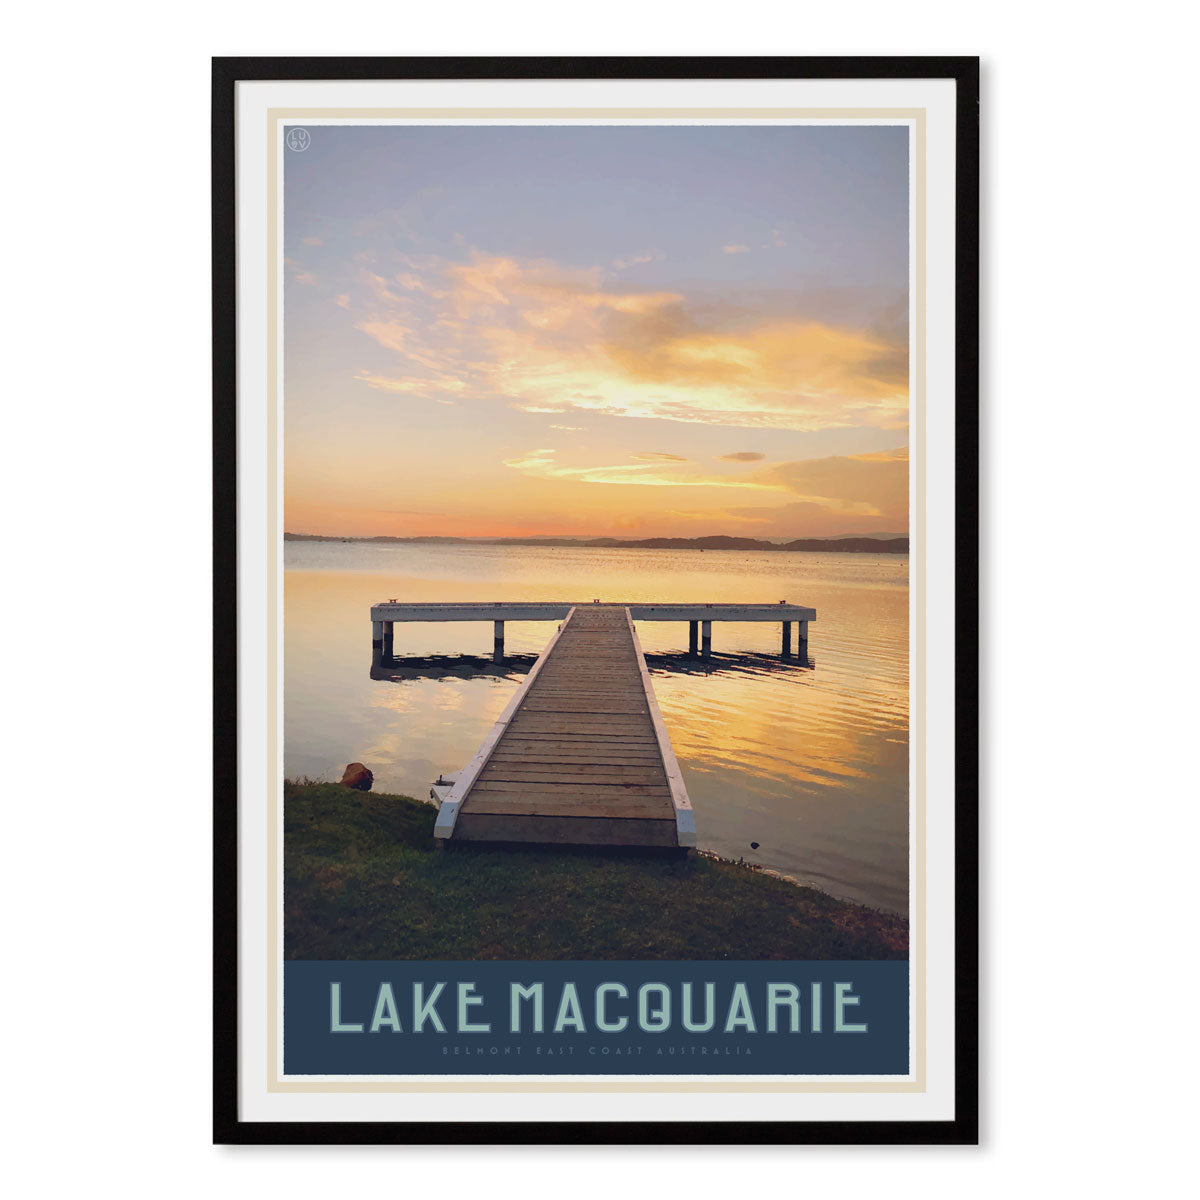 Lake Macquarie vintage travel style black framed print by places we luv 